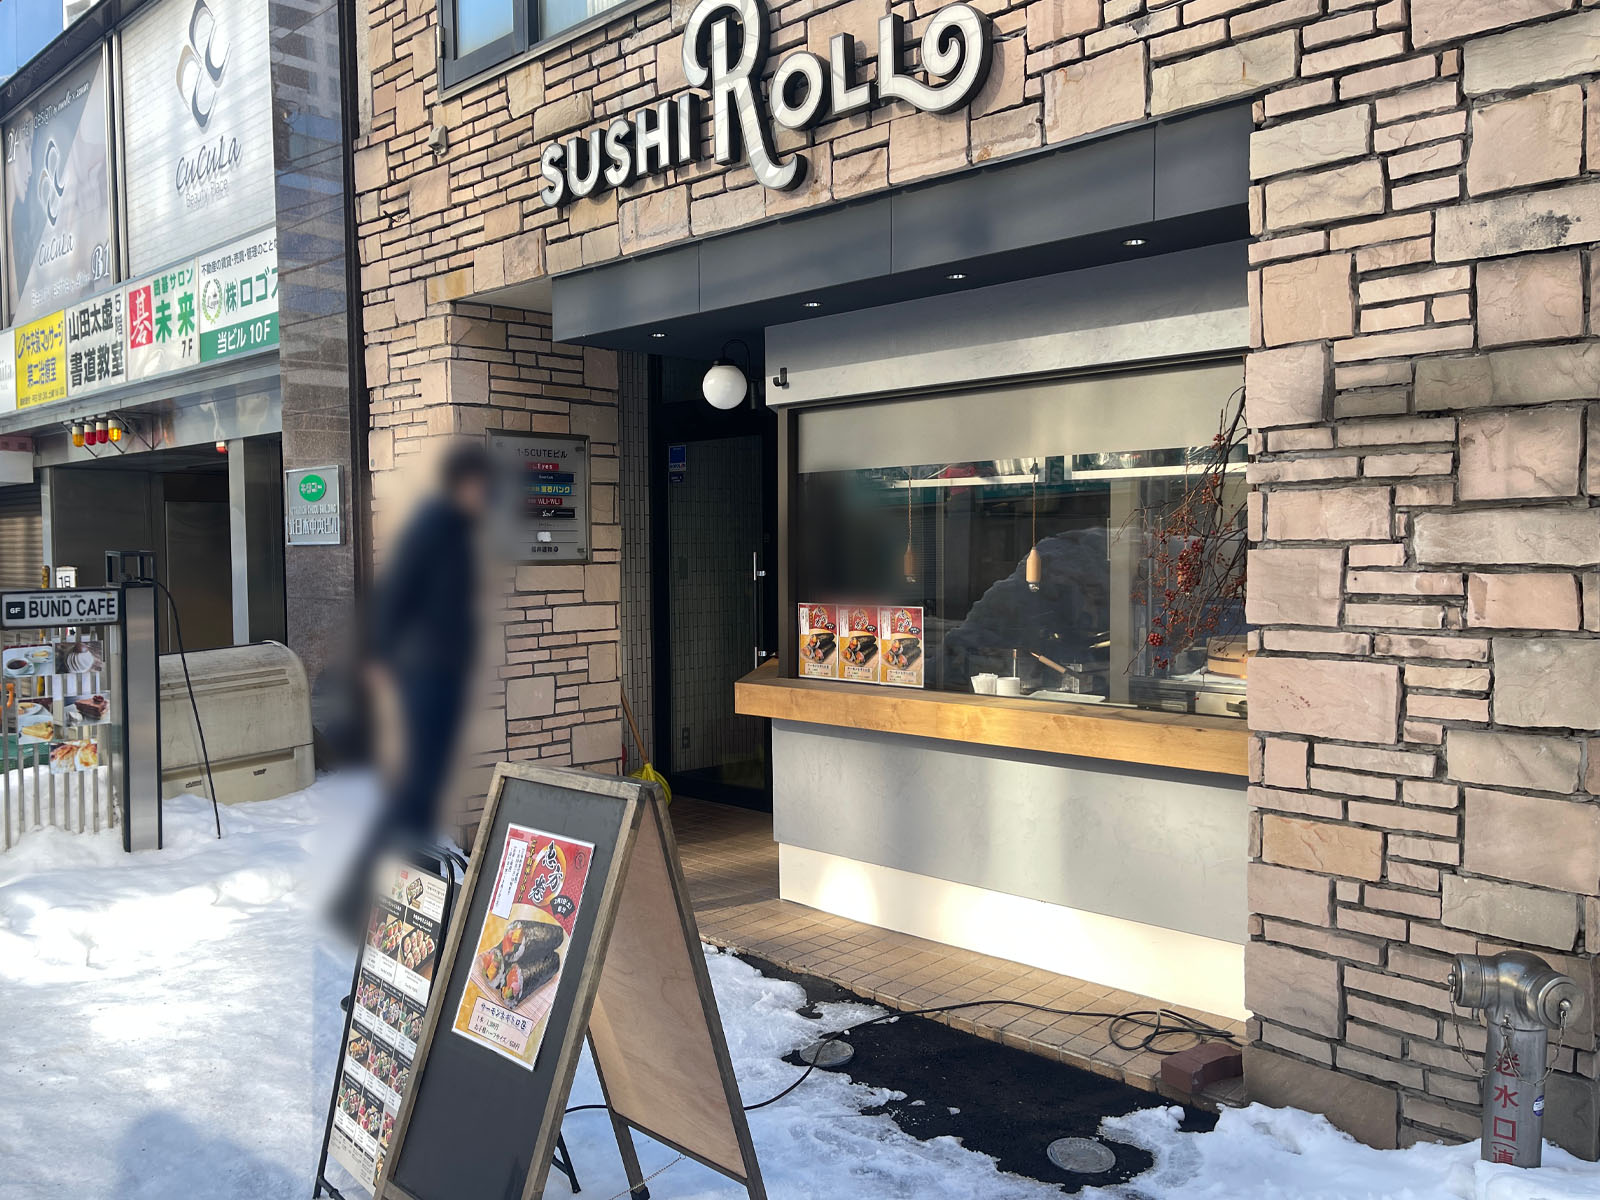 HOKKAIDO SUSHI ROLLでサーモンいくら巻きと知床和牛天ぷら巻き食べた／北海道札幌